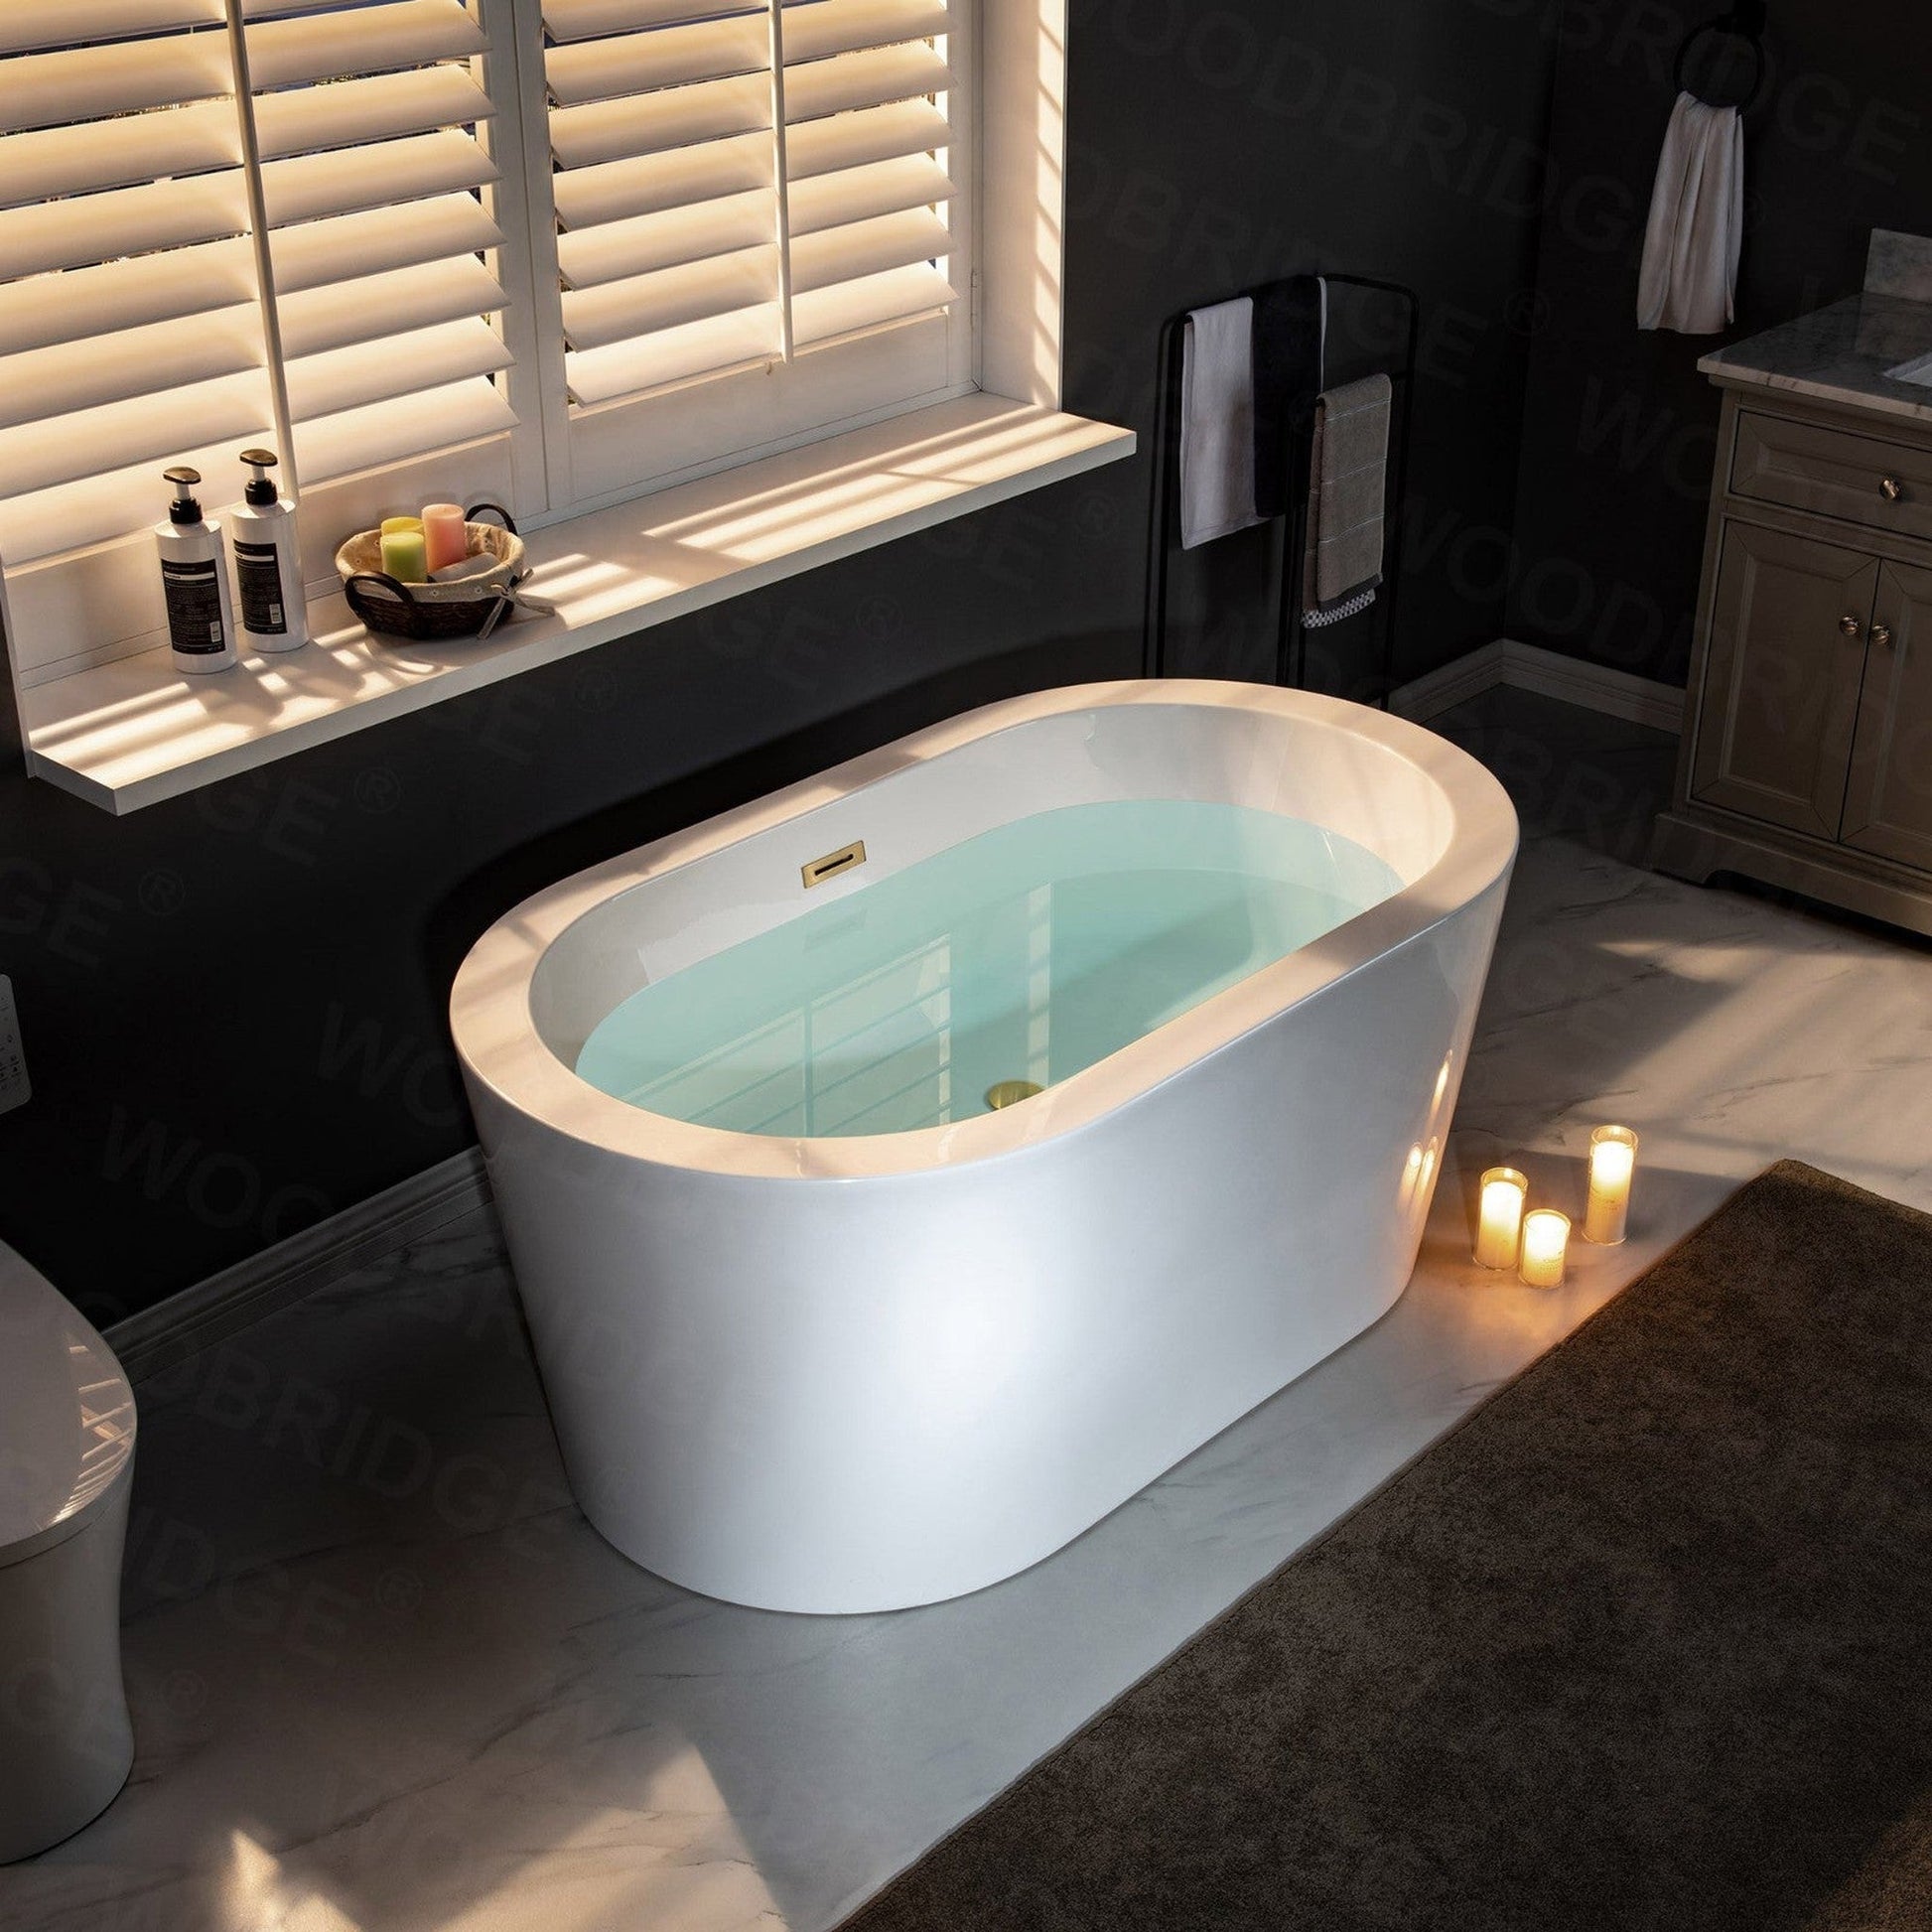 WoodBridge BTA0088 56" White Acrylic Freestanding Soaking Bathtub With Brushed Gold Drain, Overflow, F0073BGVT Tub Filler and Caddy Tray